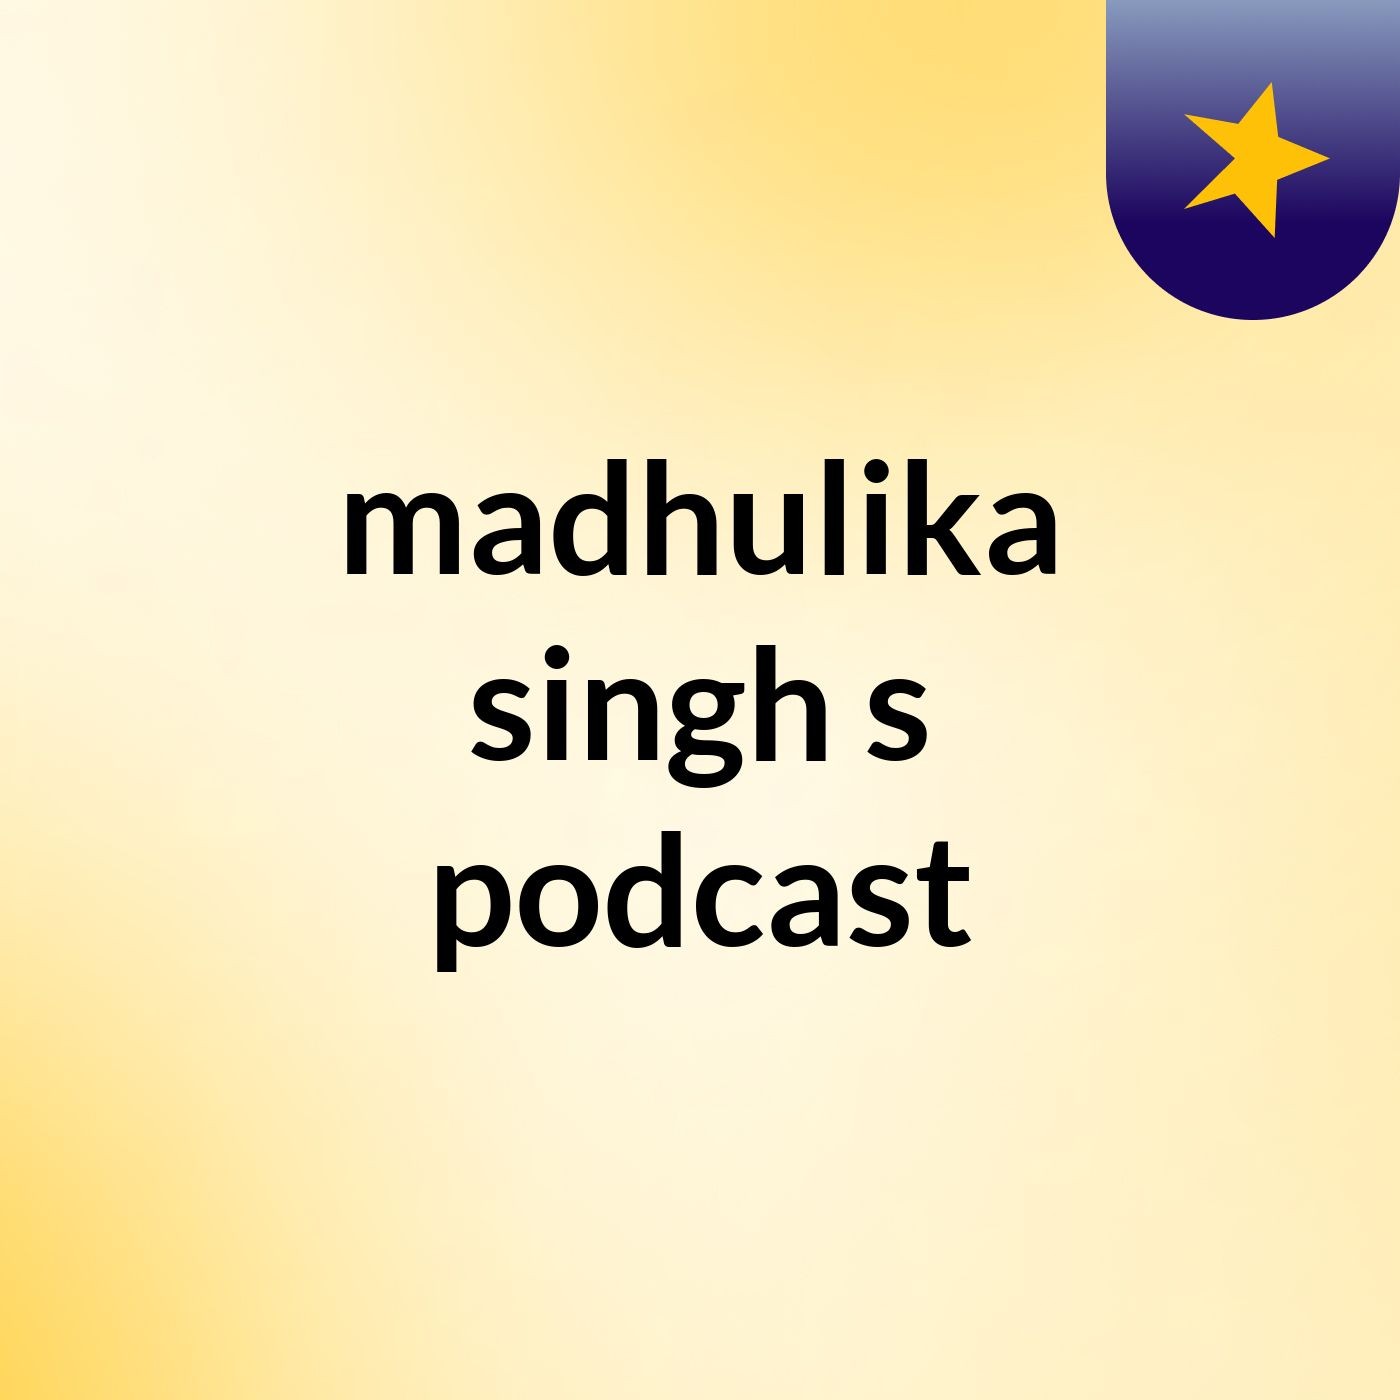 madhulika singh's podcast